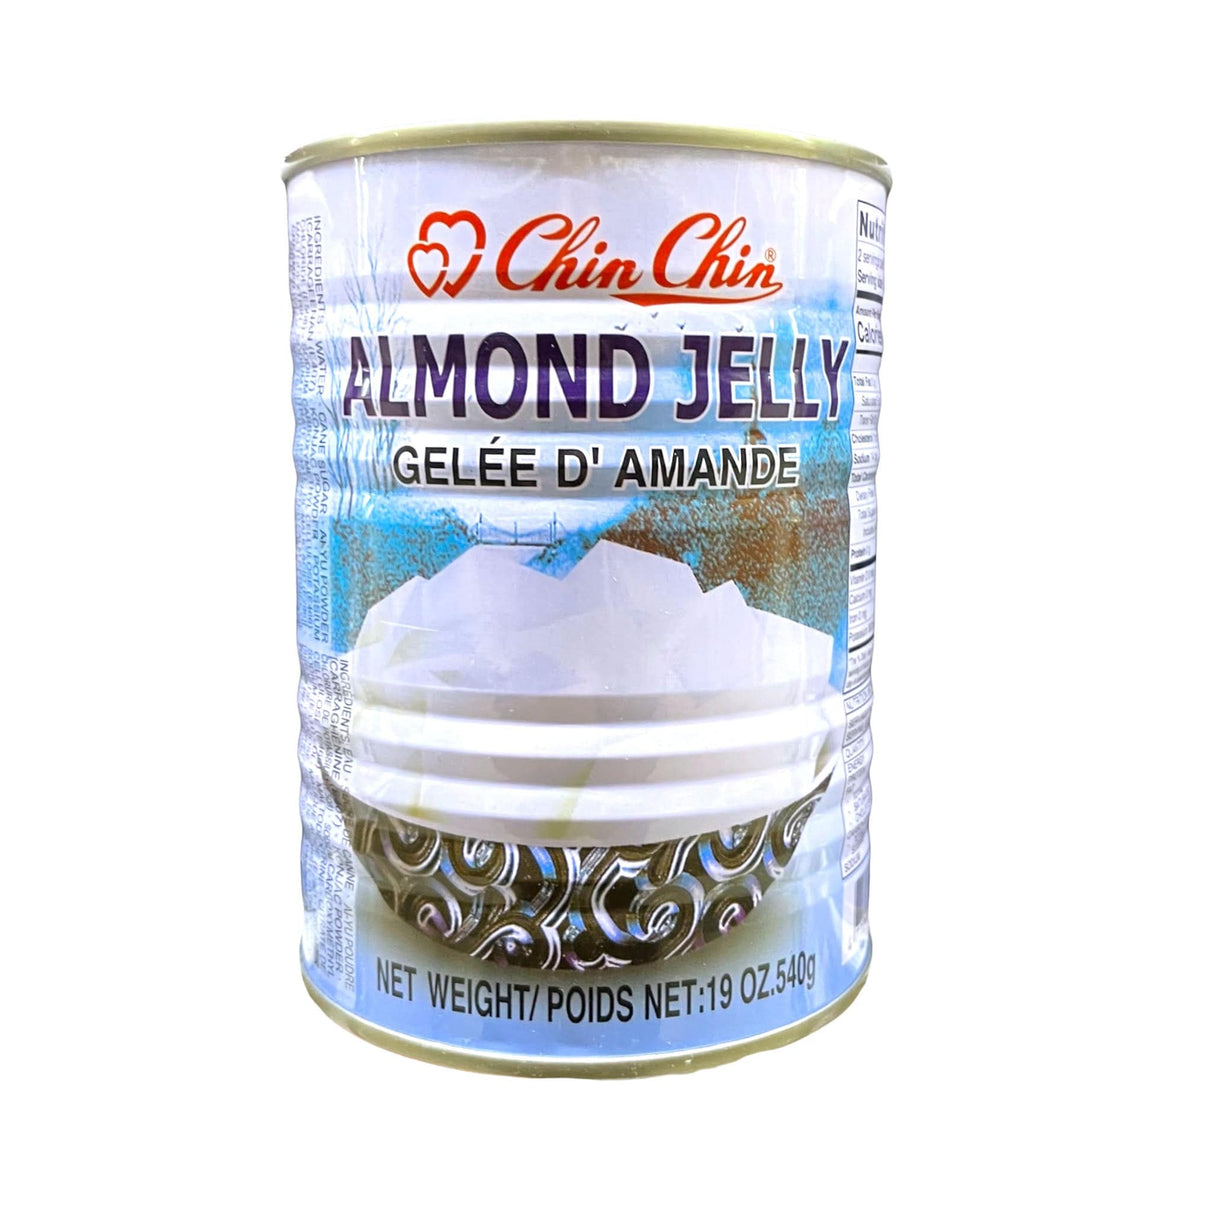 Chin Chin Brand Almond Jelly